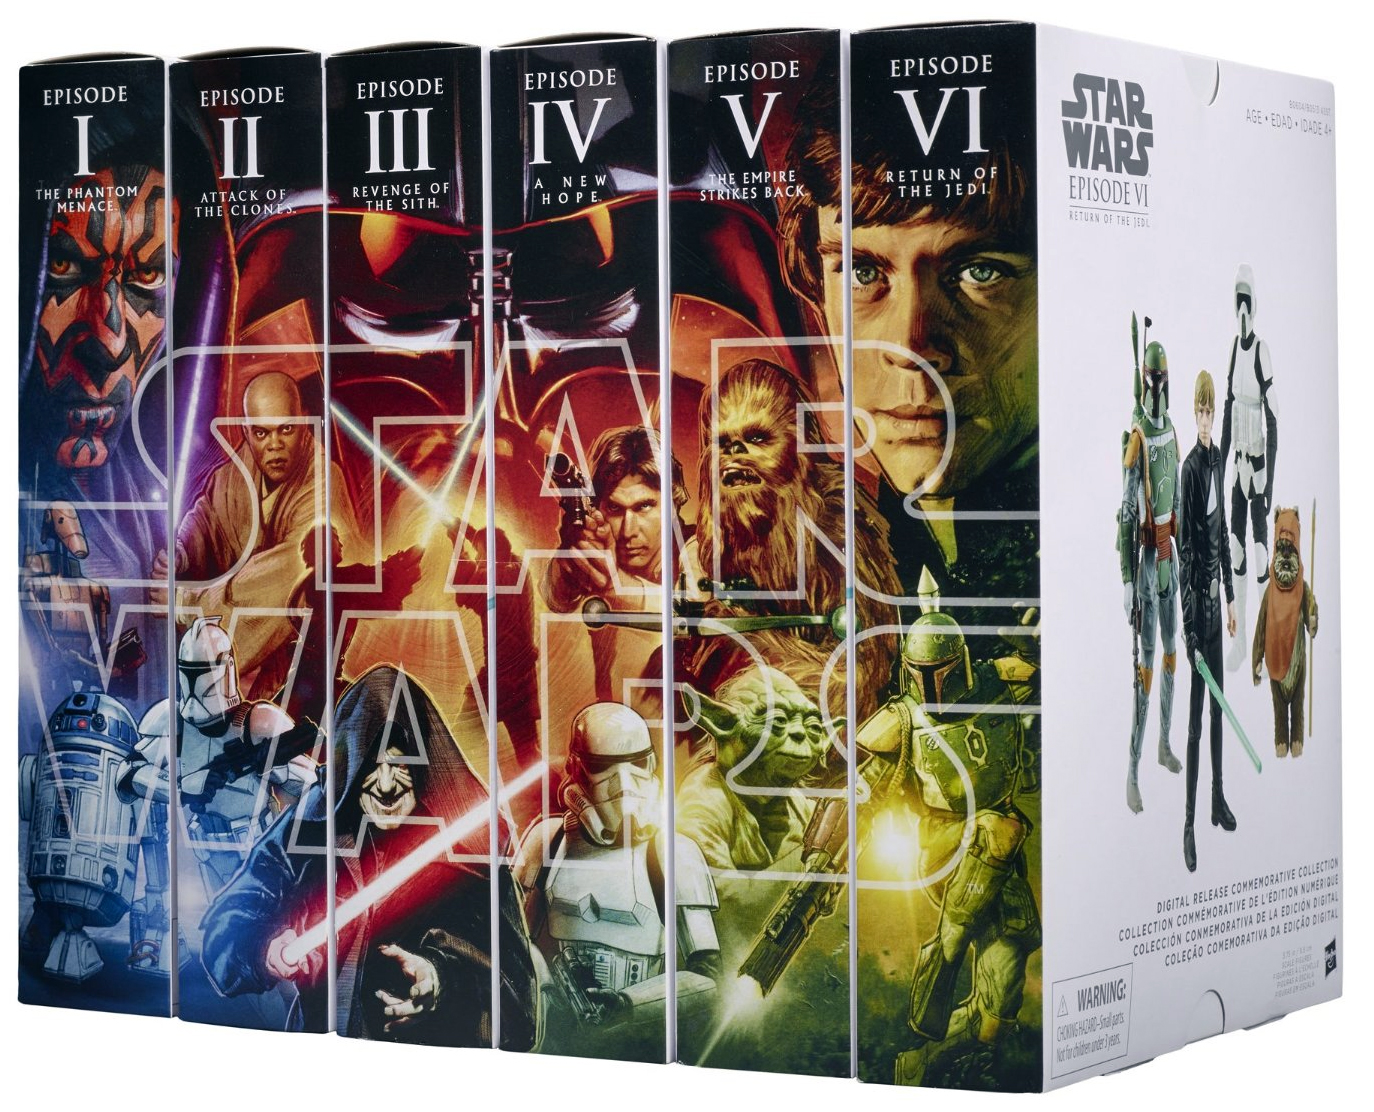 Star Wars Digital Release Commemorative Collection box set